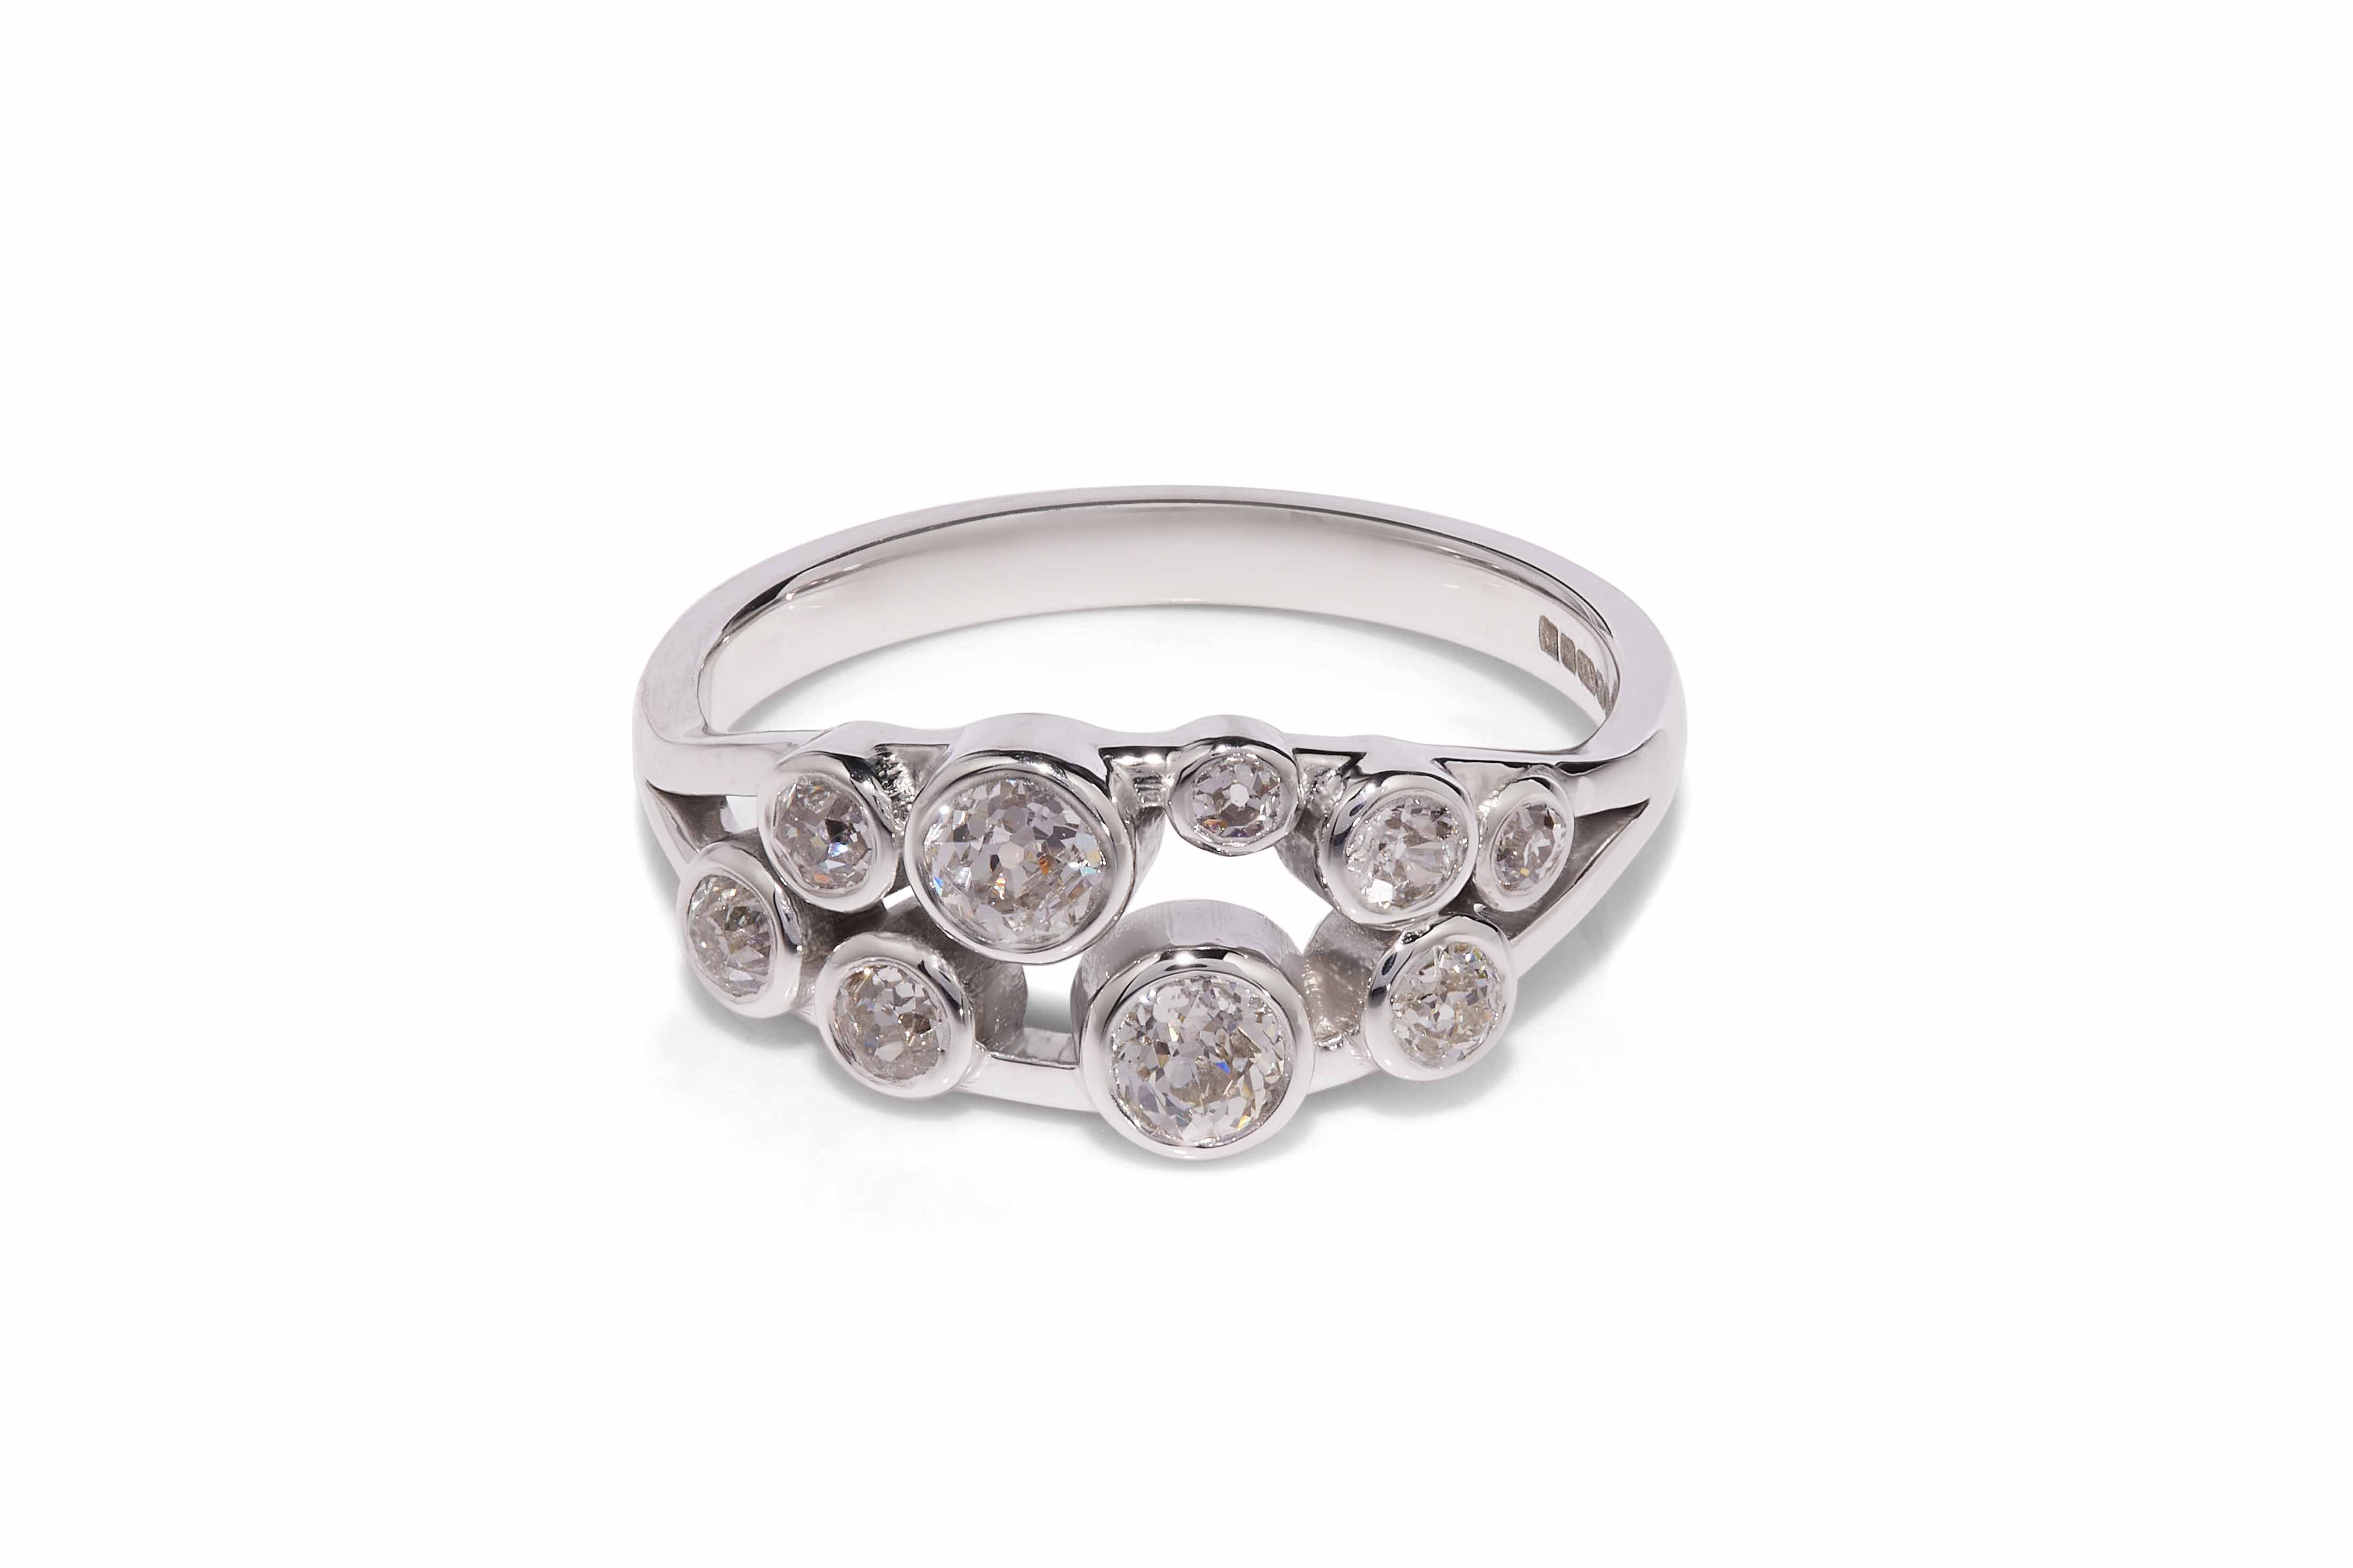 14ct white gold, split shank diamond ring with bezel set multi-stone lying on a white background